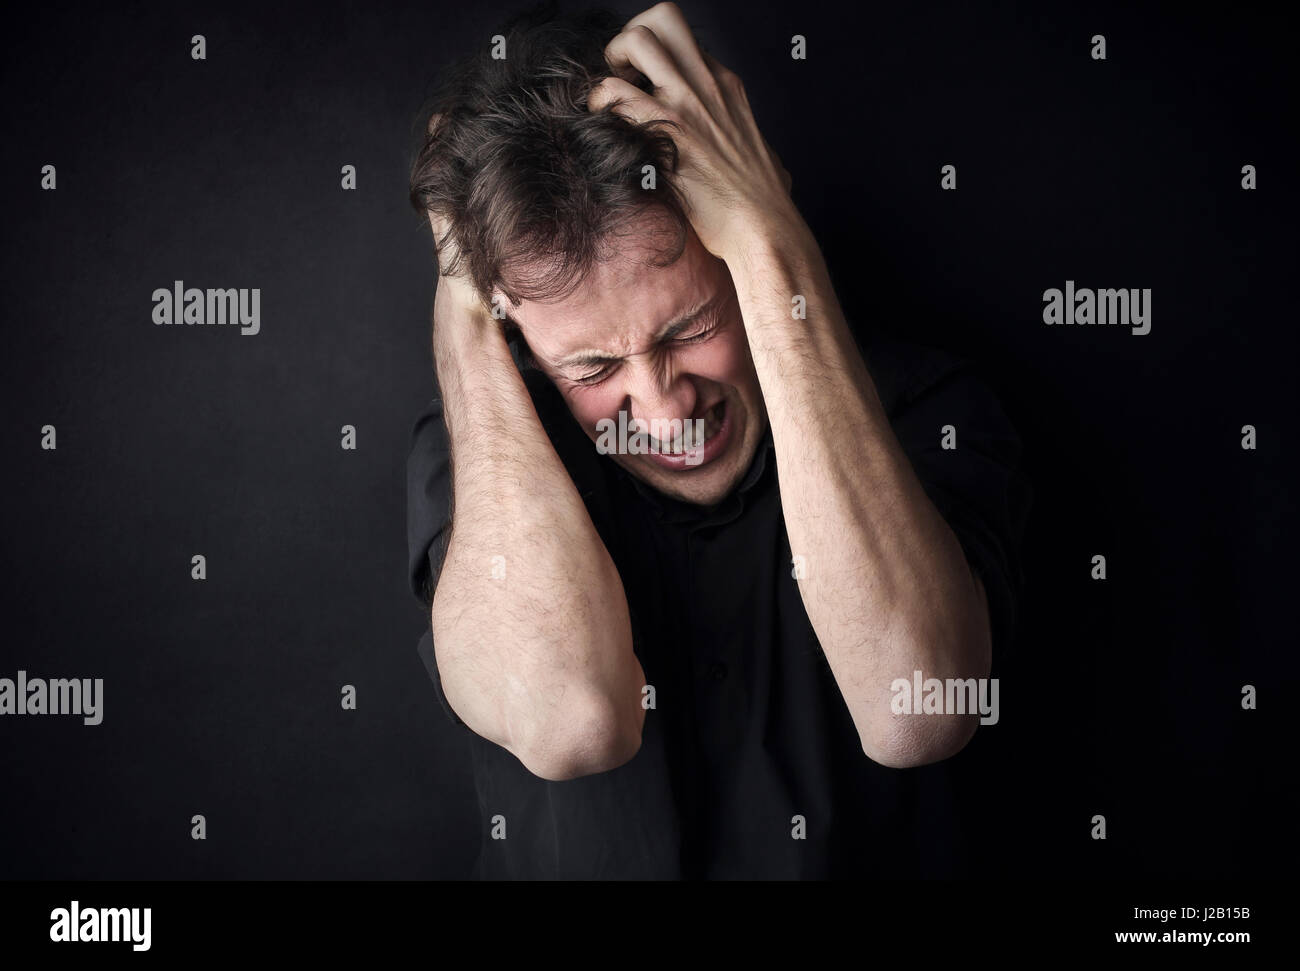 Depressed man suffering Stock Photo